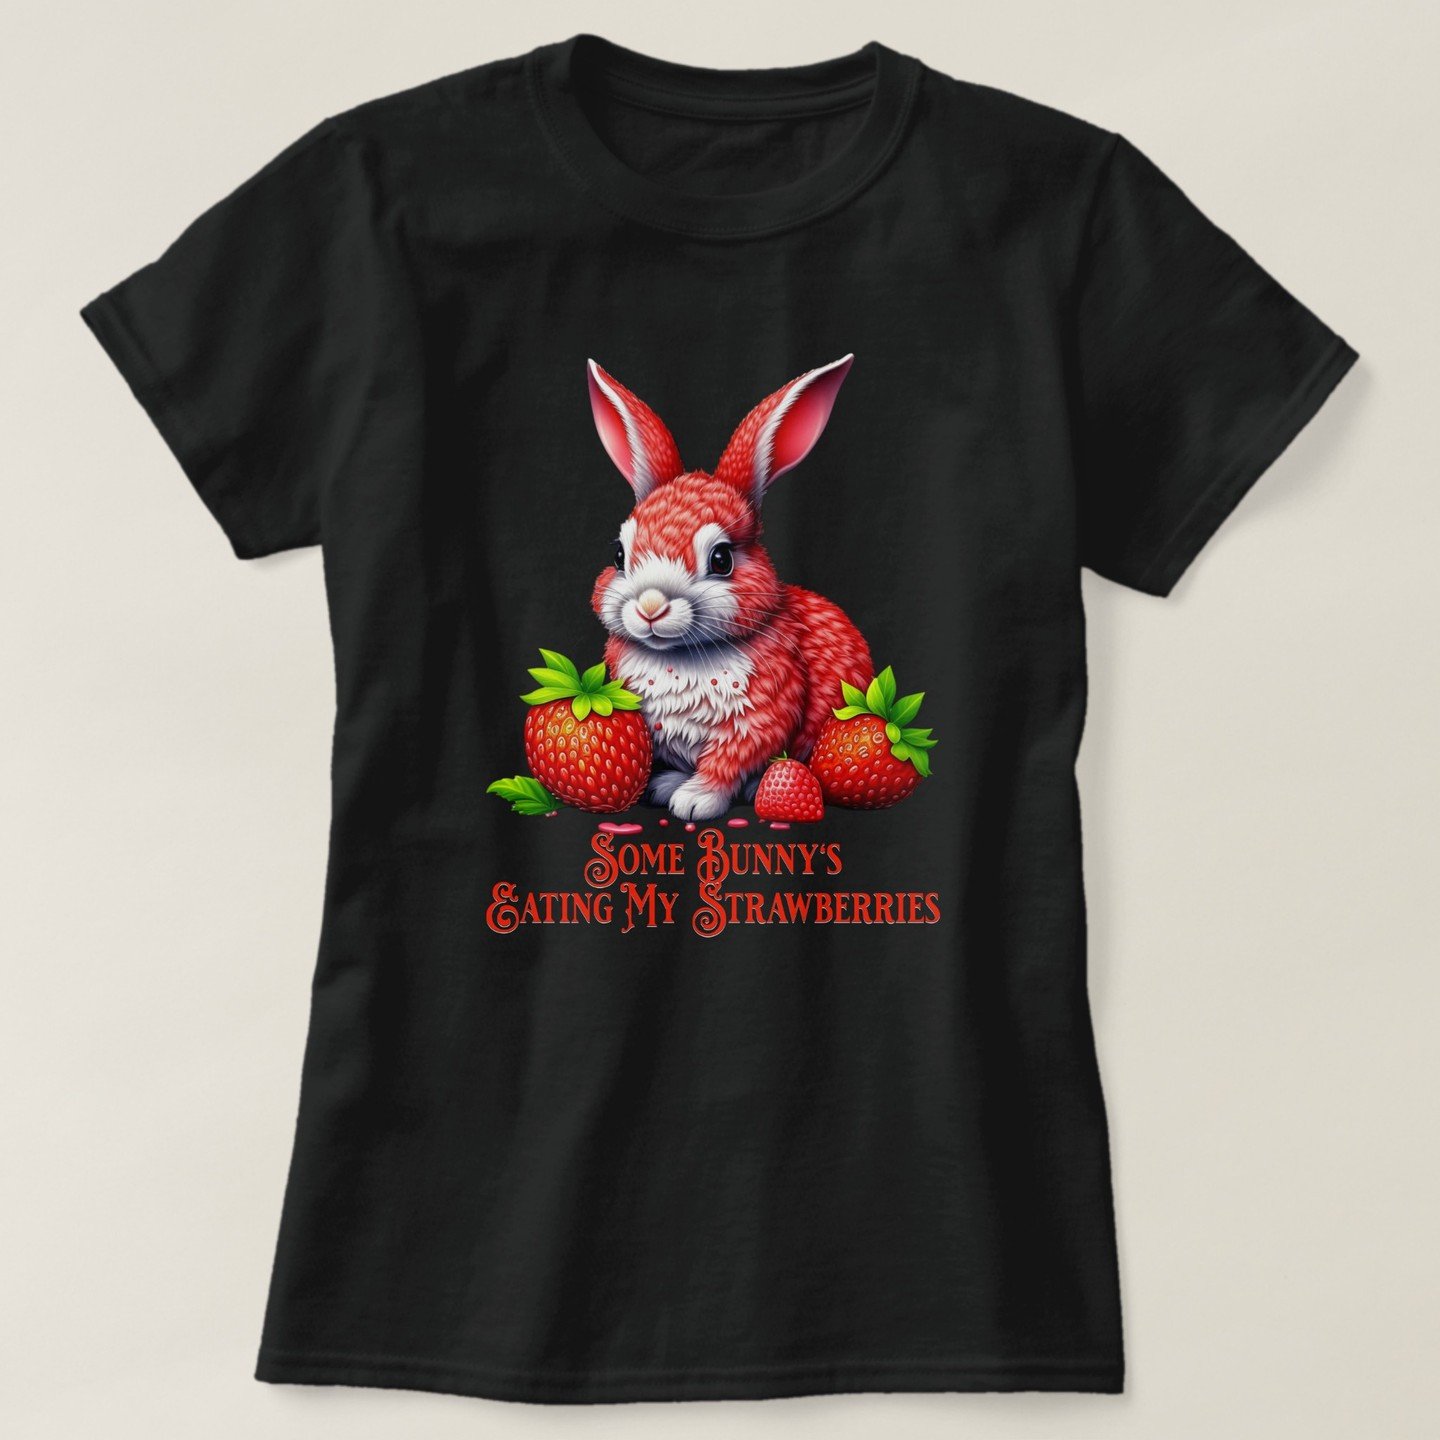 May is National Strawberry Month! #linkinbio
.
#zazzle #redbubble #teepublic #zazzlemade #shirt #stickers #mugs
#strawberrybunny #nationalstrawberrymonth #strawberries